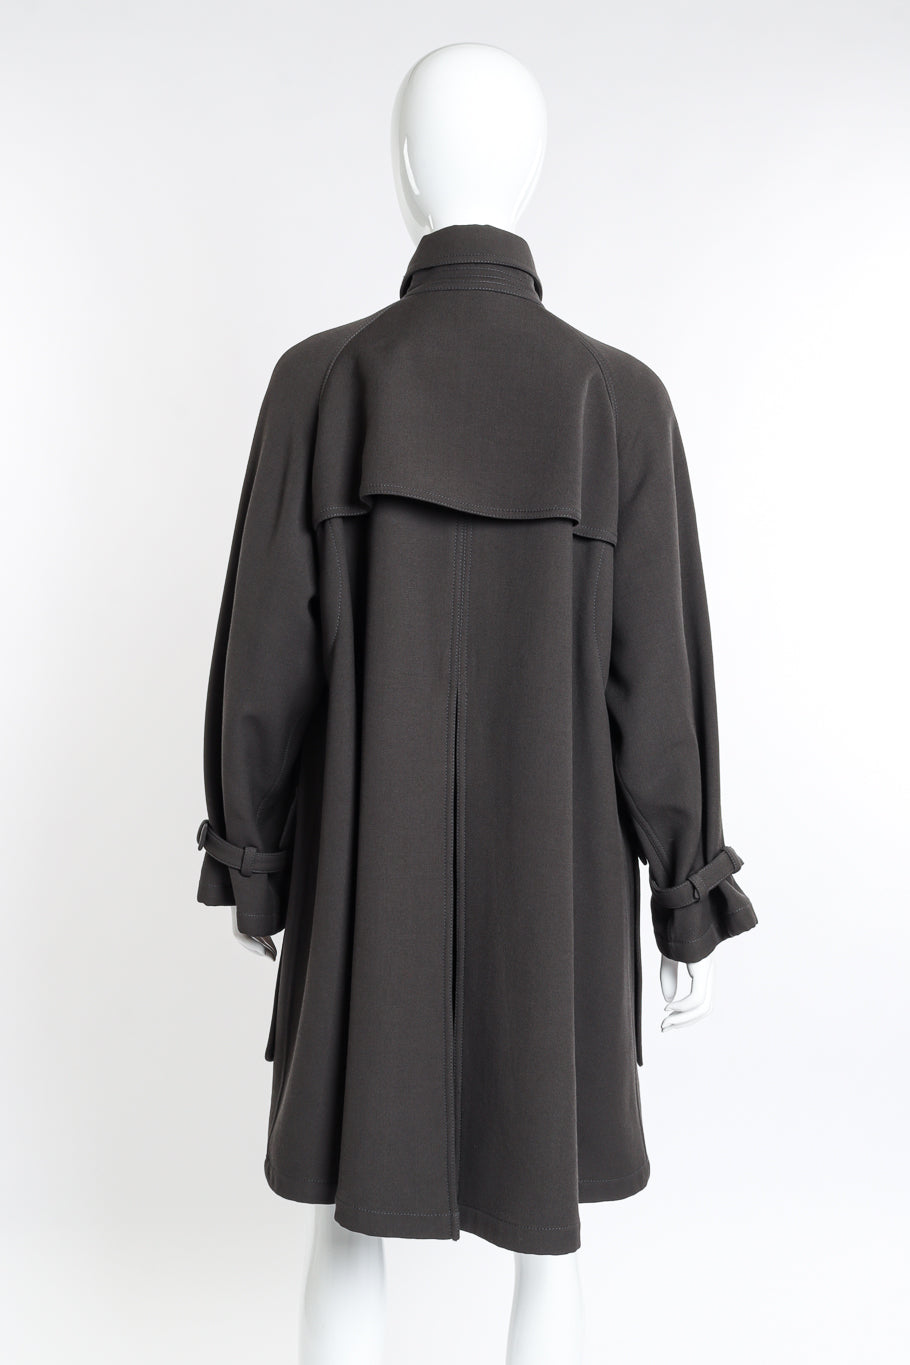 Vintage Hermés Wool Trench Coat back on mannequin @recess la